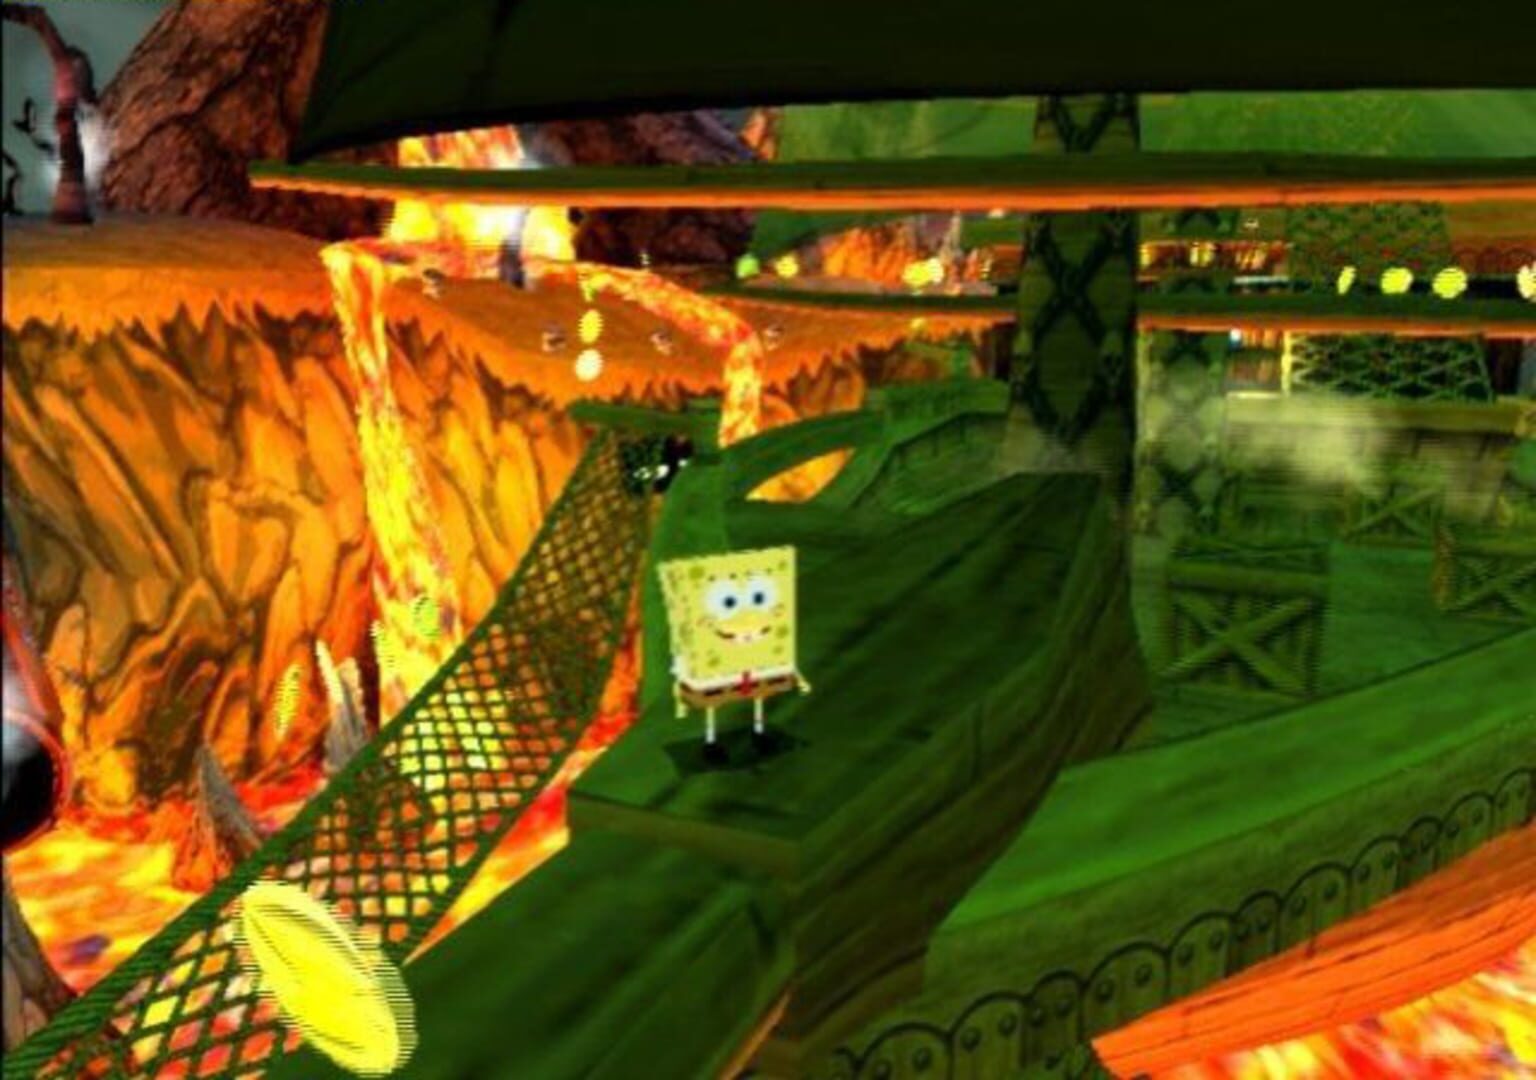 Spongebob revenge. Spongebob Revenge of the Flying Dutchman. Spongebob Squarepants: Revenge of the Flying Dutchman (2002). Flying Dutchman Treasure Hunt Spongebob настольная игра. Lost Dutchman mine (Video game).